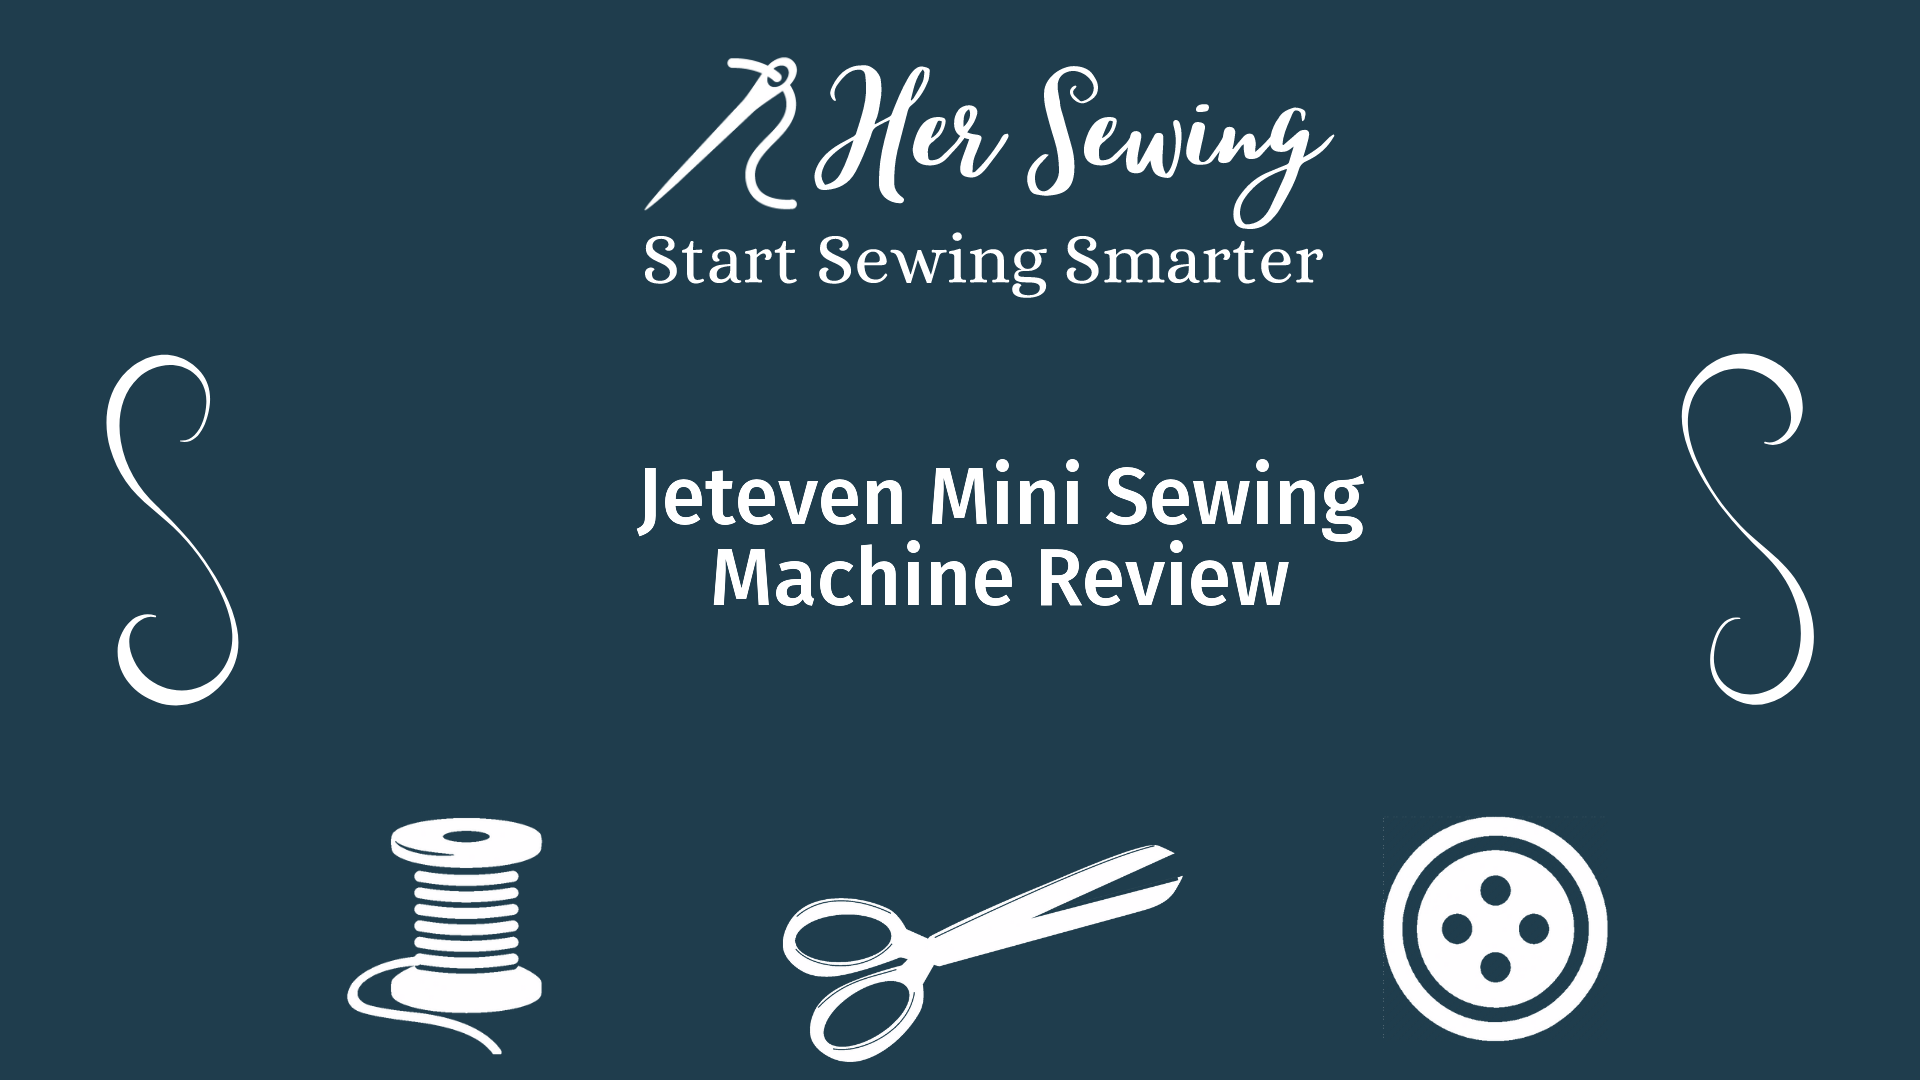 Jeteven Mini Sewing Machine Review